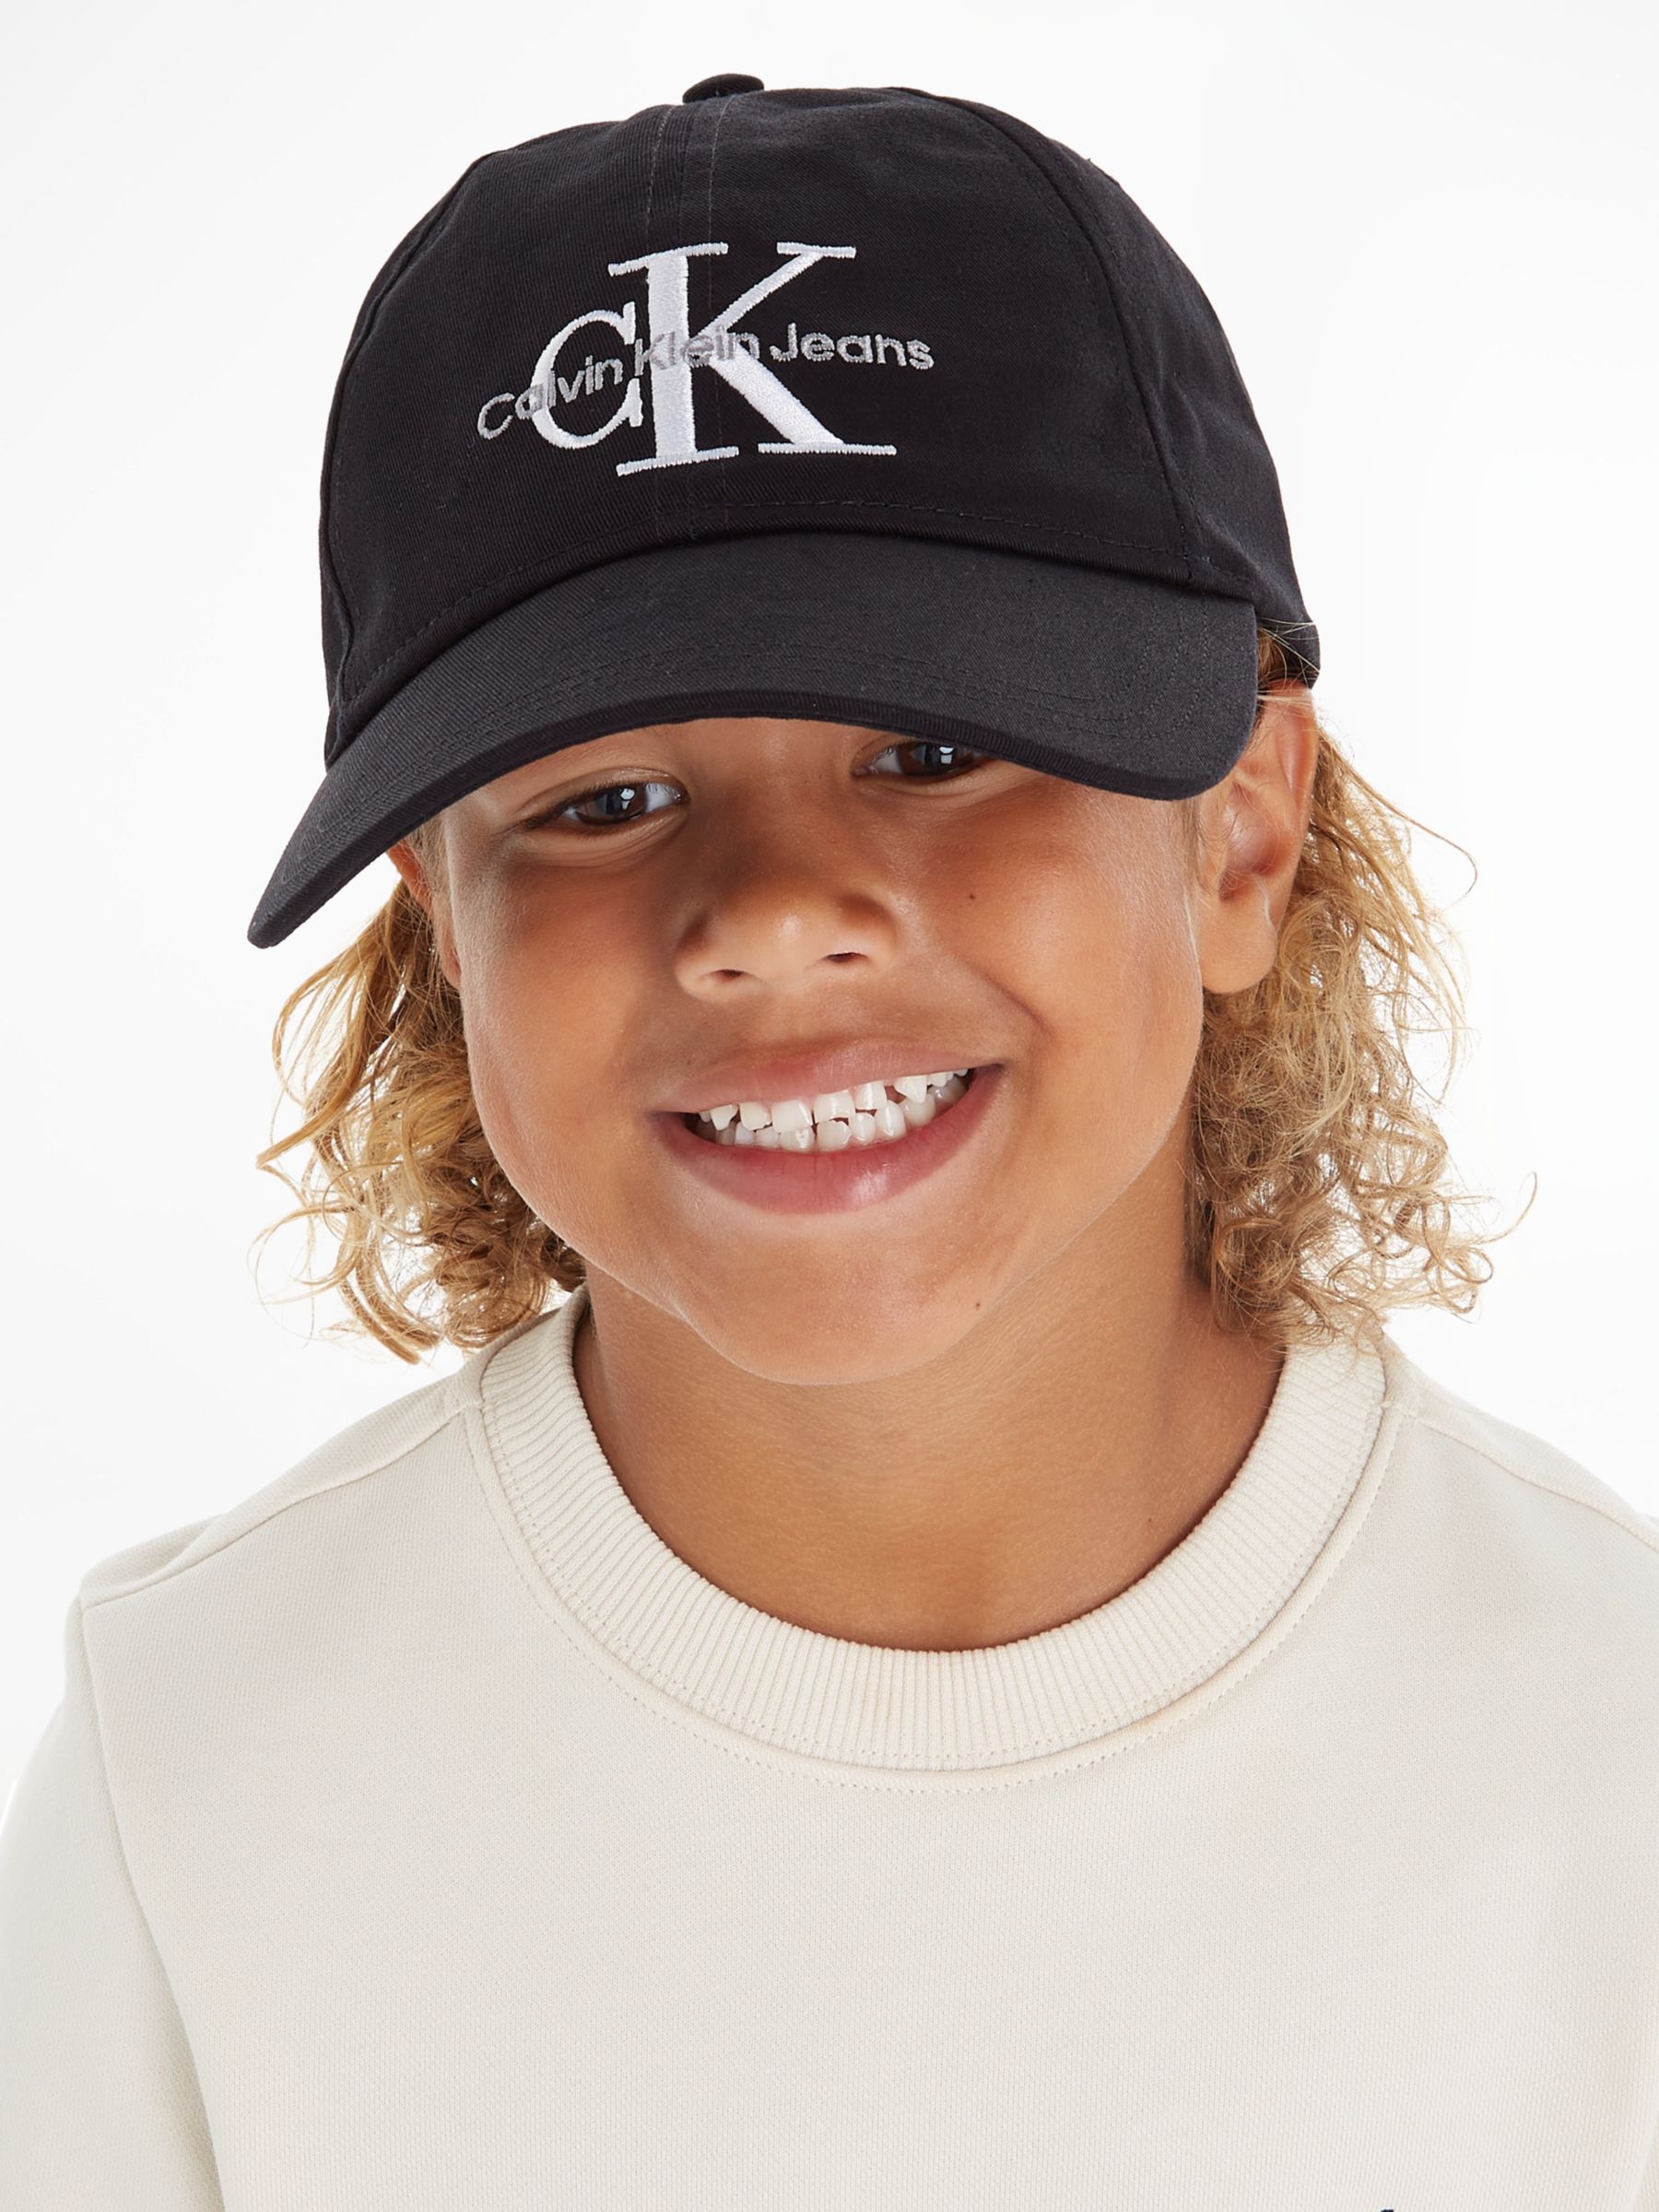 Calvin Klein Jeans Monogram Logo at Cap, John Lewis Partners & Black Baseball